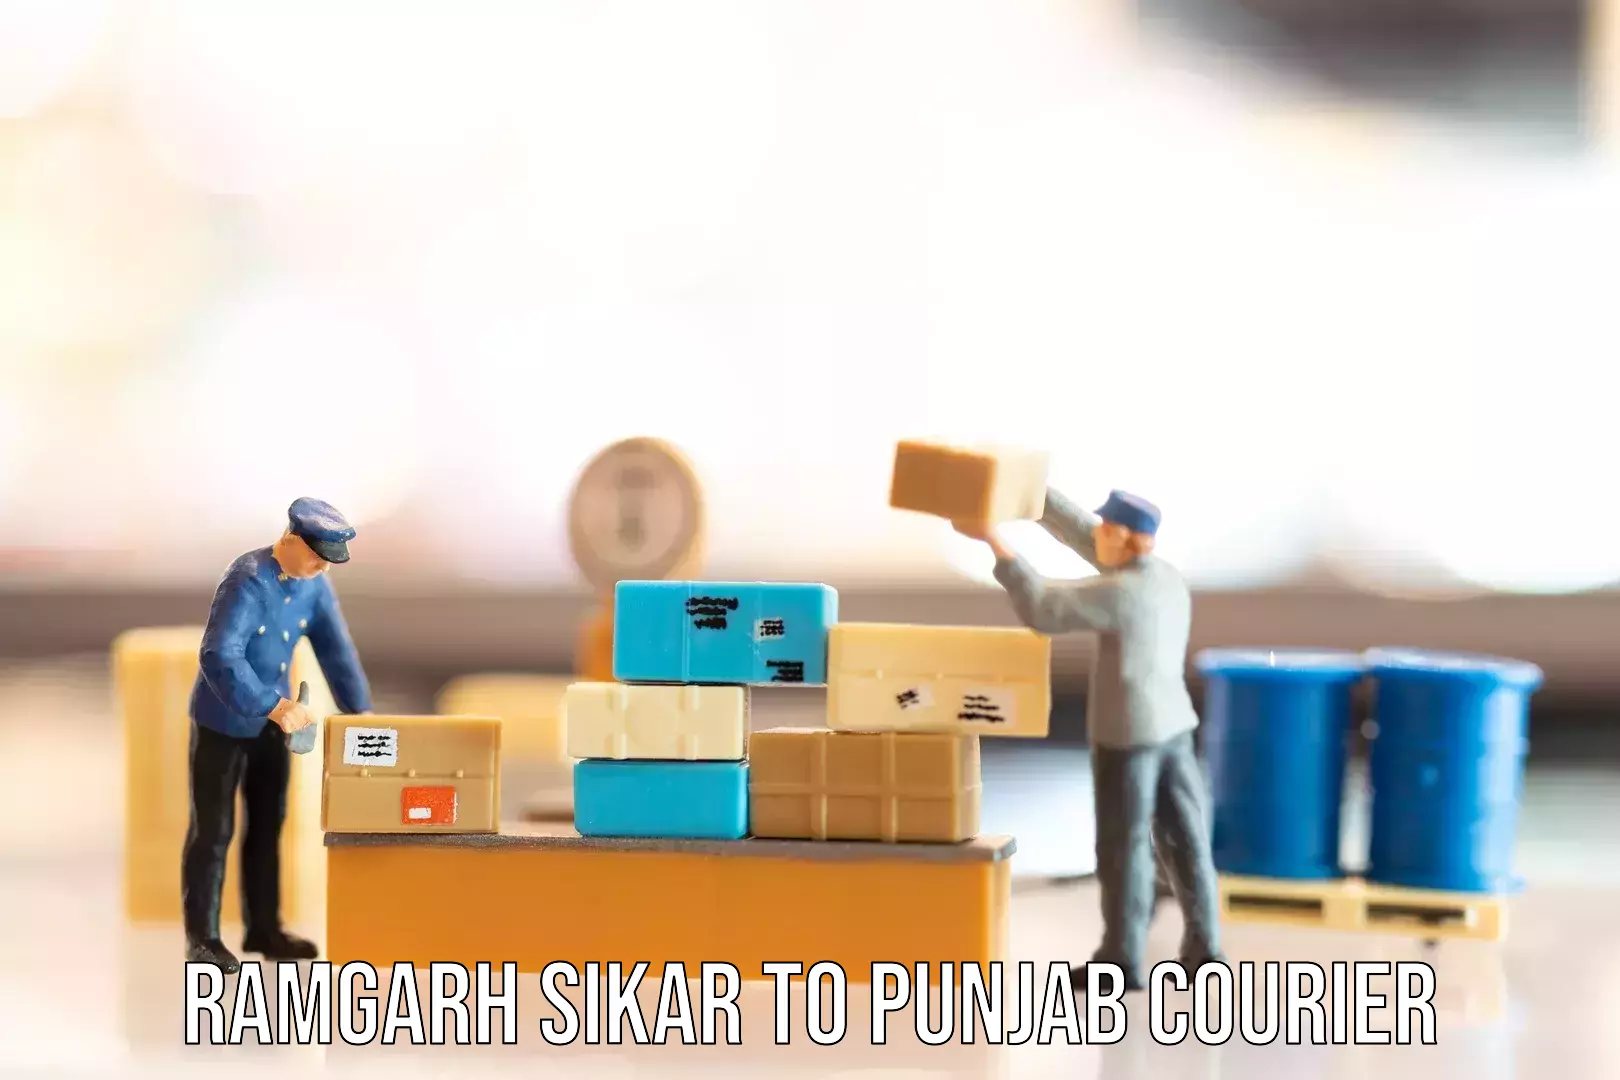 Luggage transport company Ramgarh Sikar to Punjab